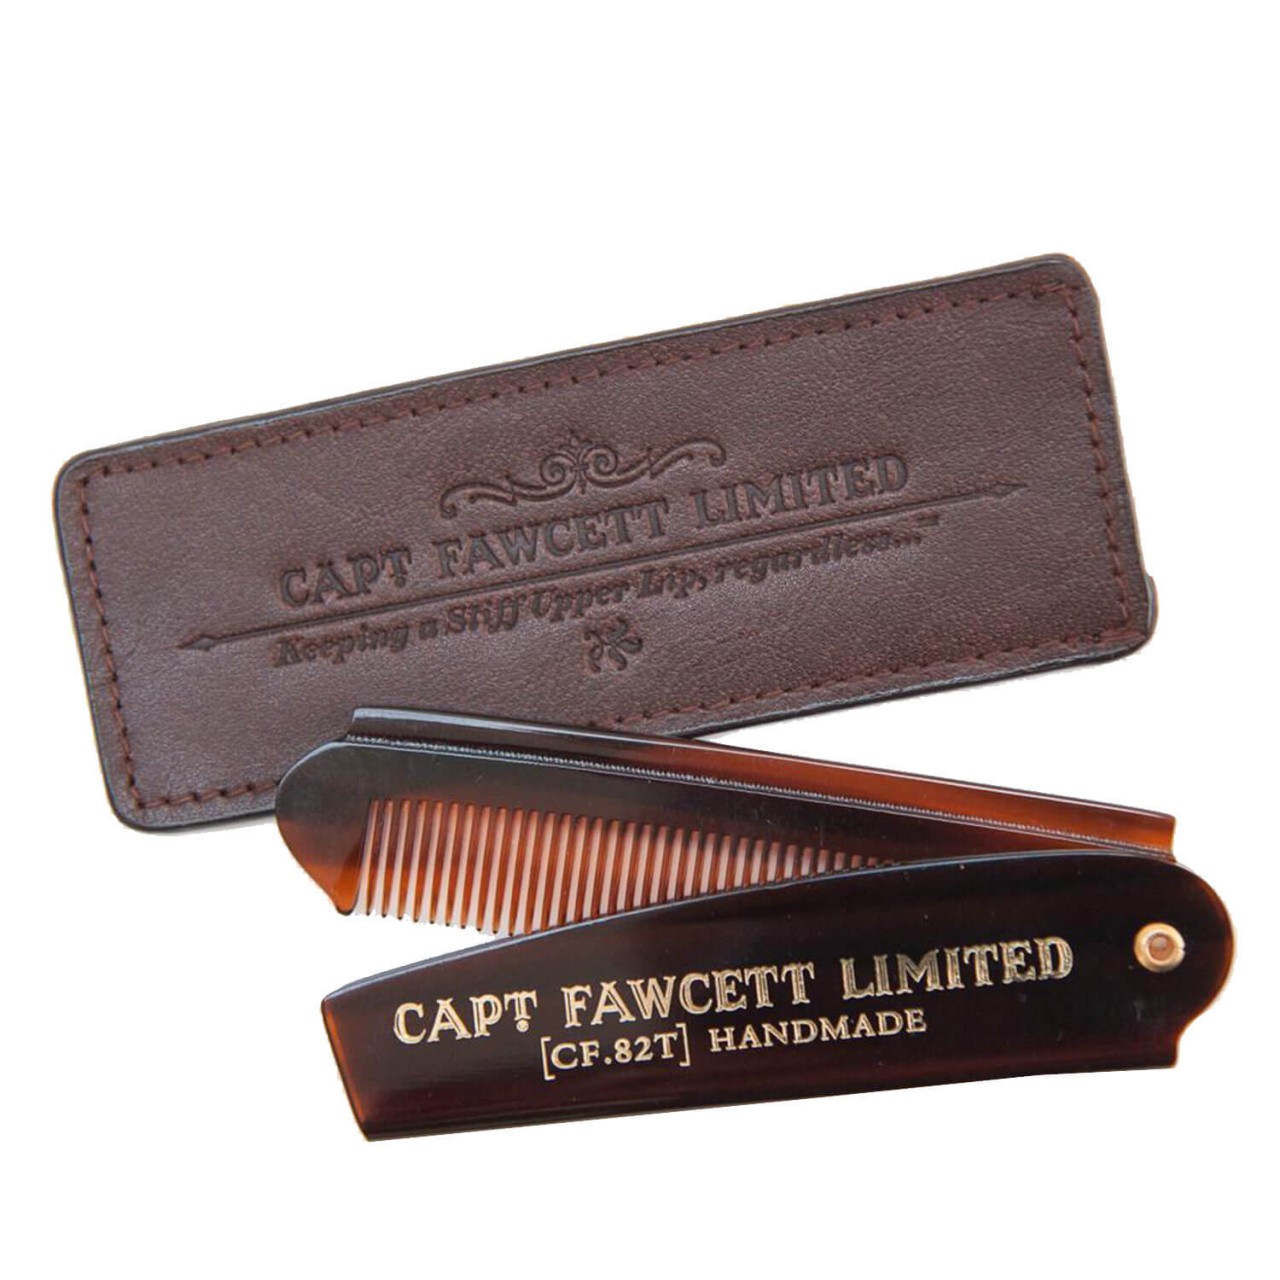 Capt. Fawcett Tools - Folding Pocket Beard Comb with Leather Case von Captain Fawcett